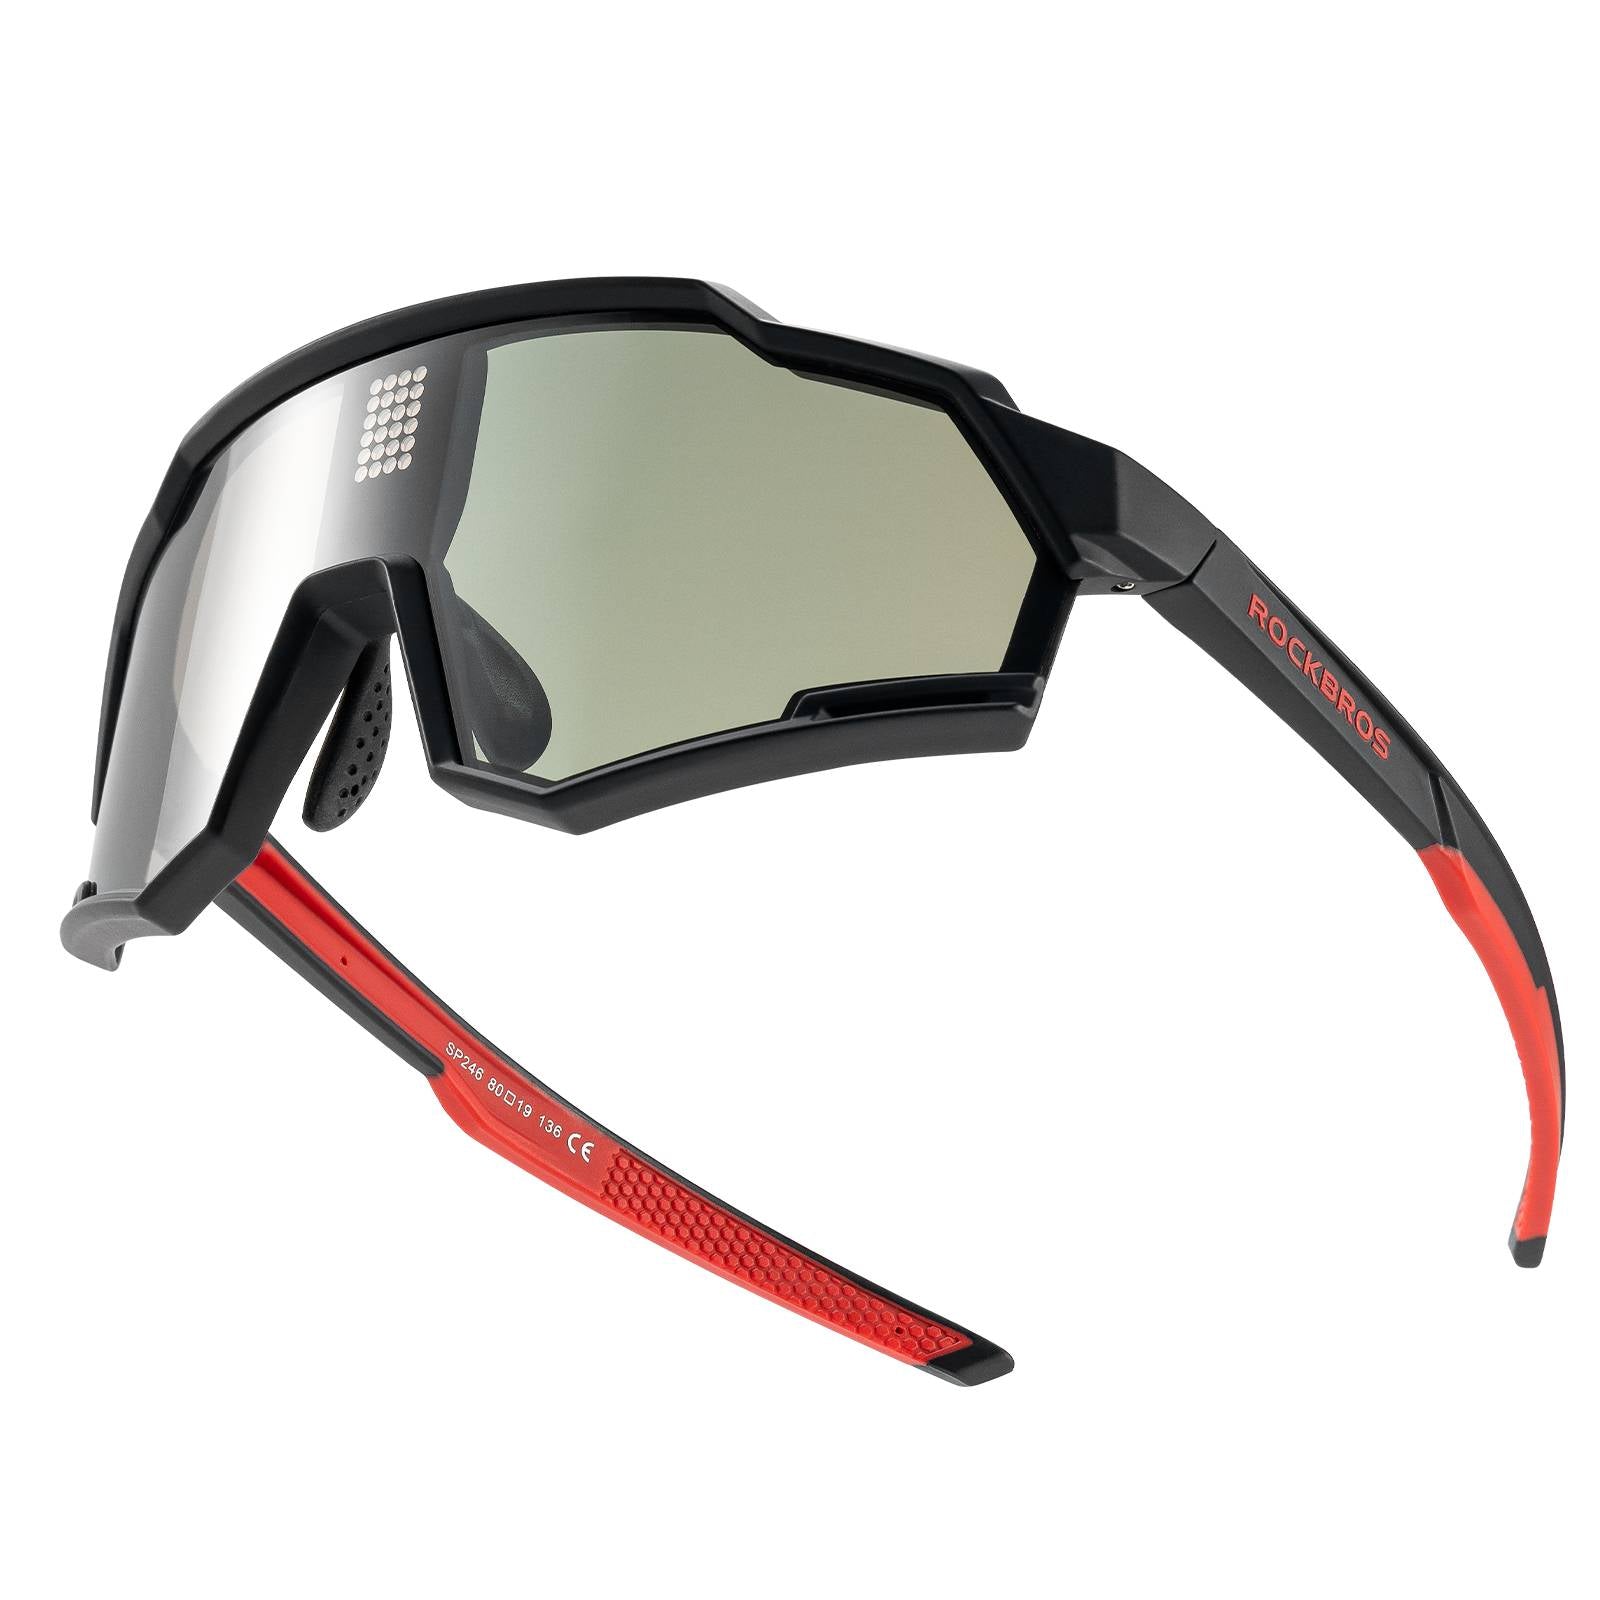 ROCKBROS 10181 Photochrome Cycling Glasses Self Tinting –